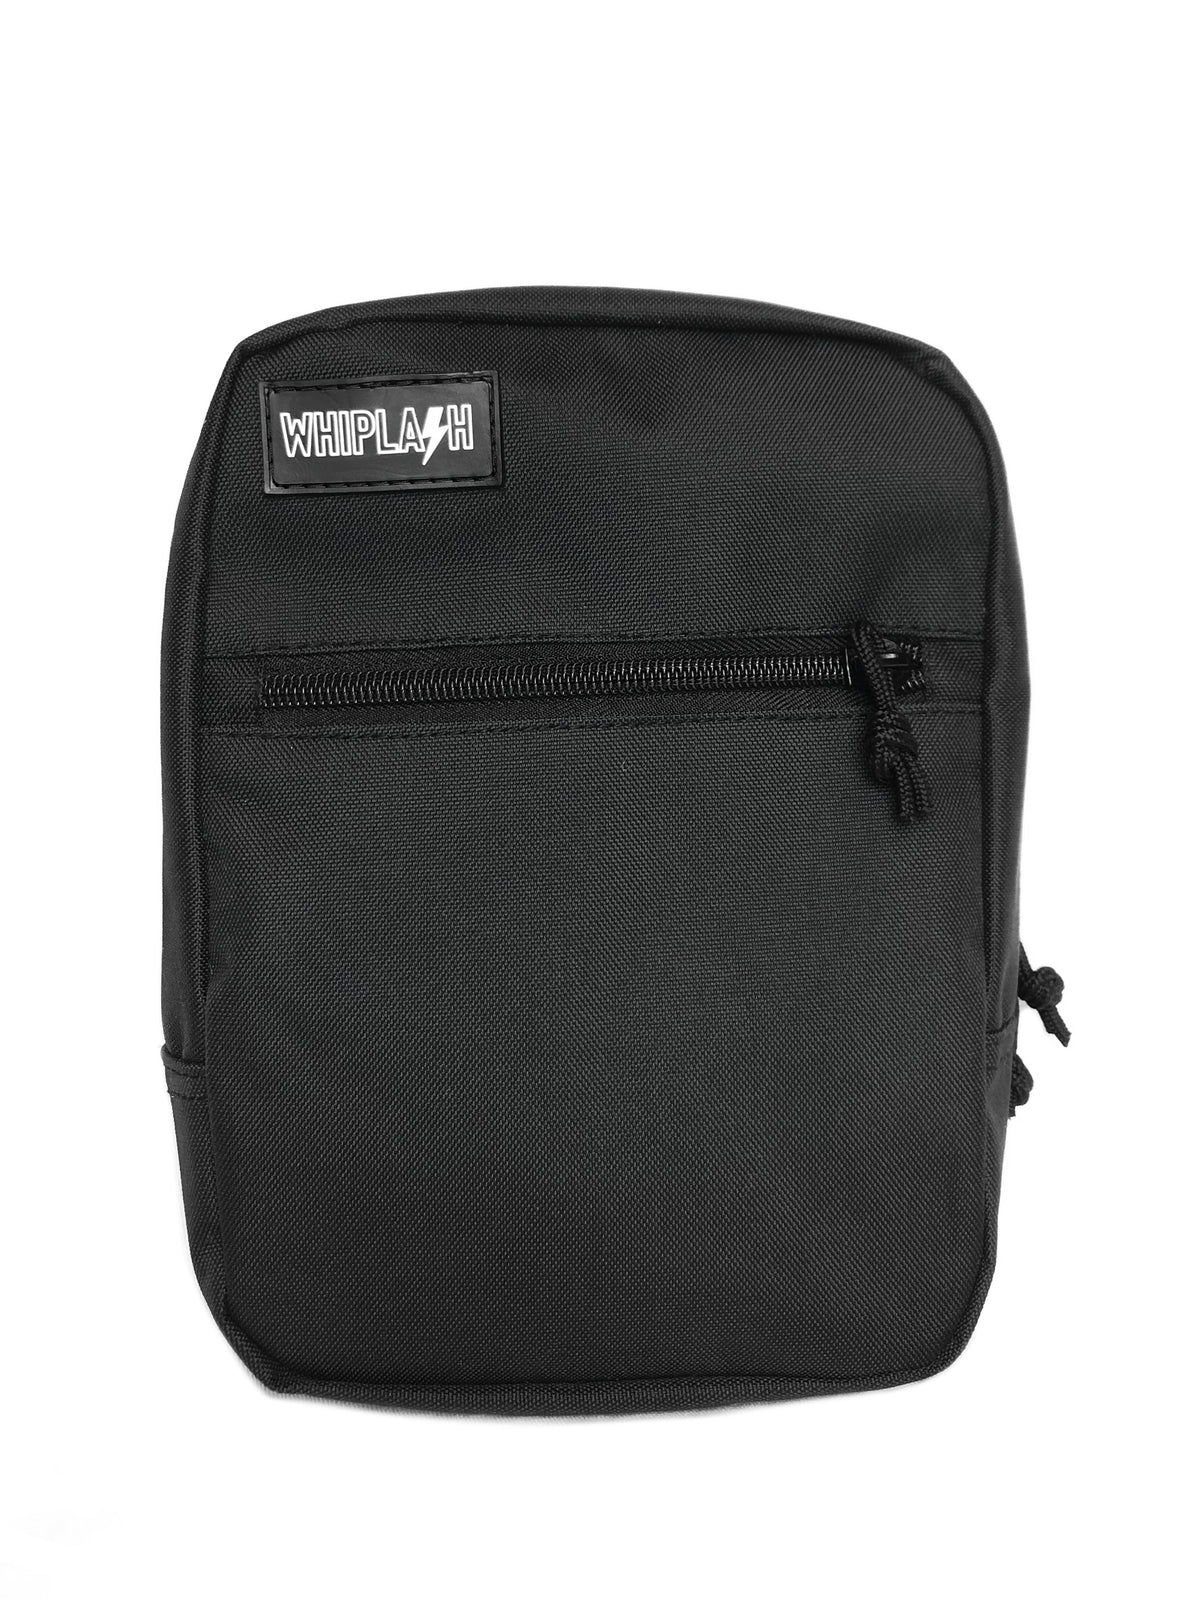 Venture Handlebar Bag - Whiplash Speed Company